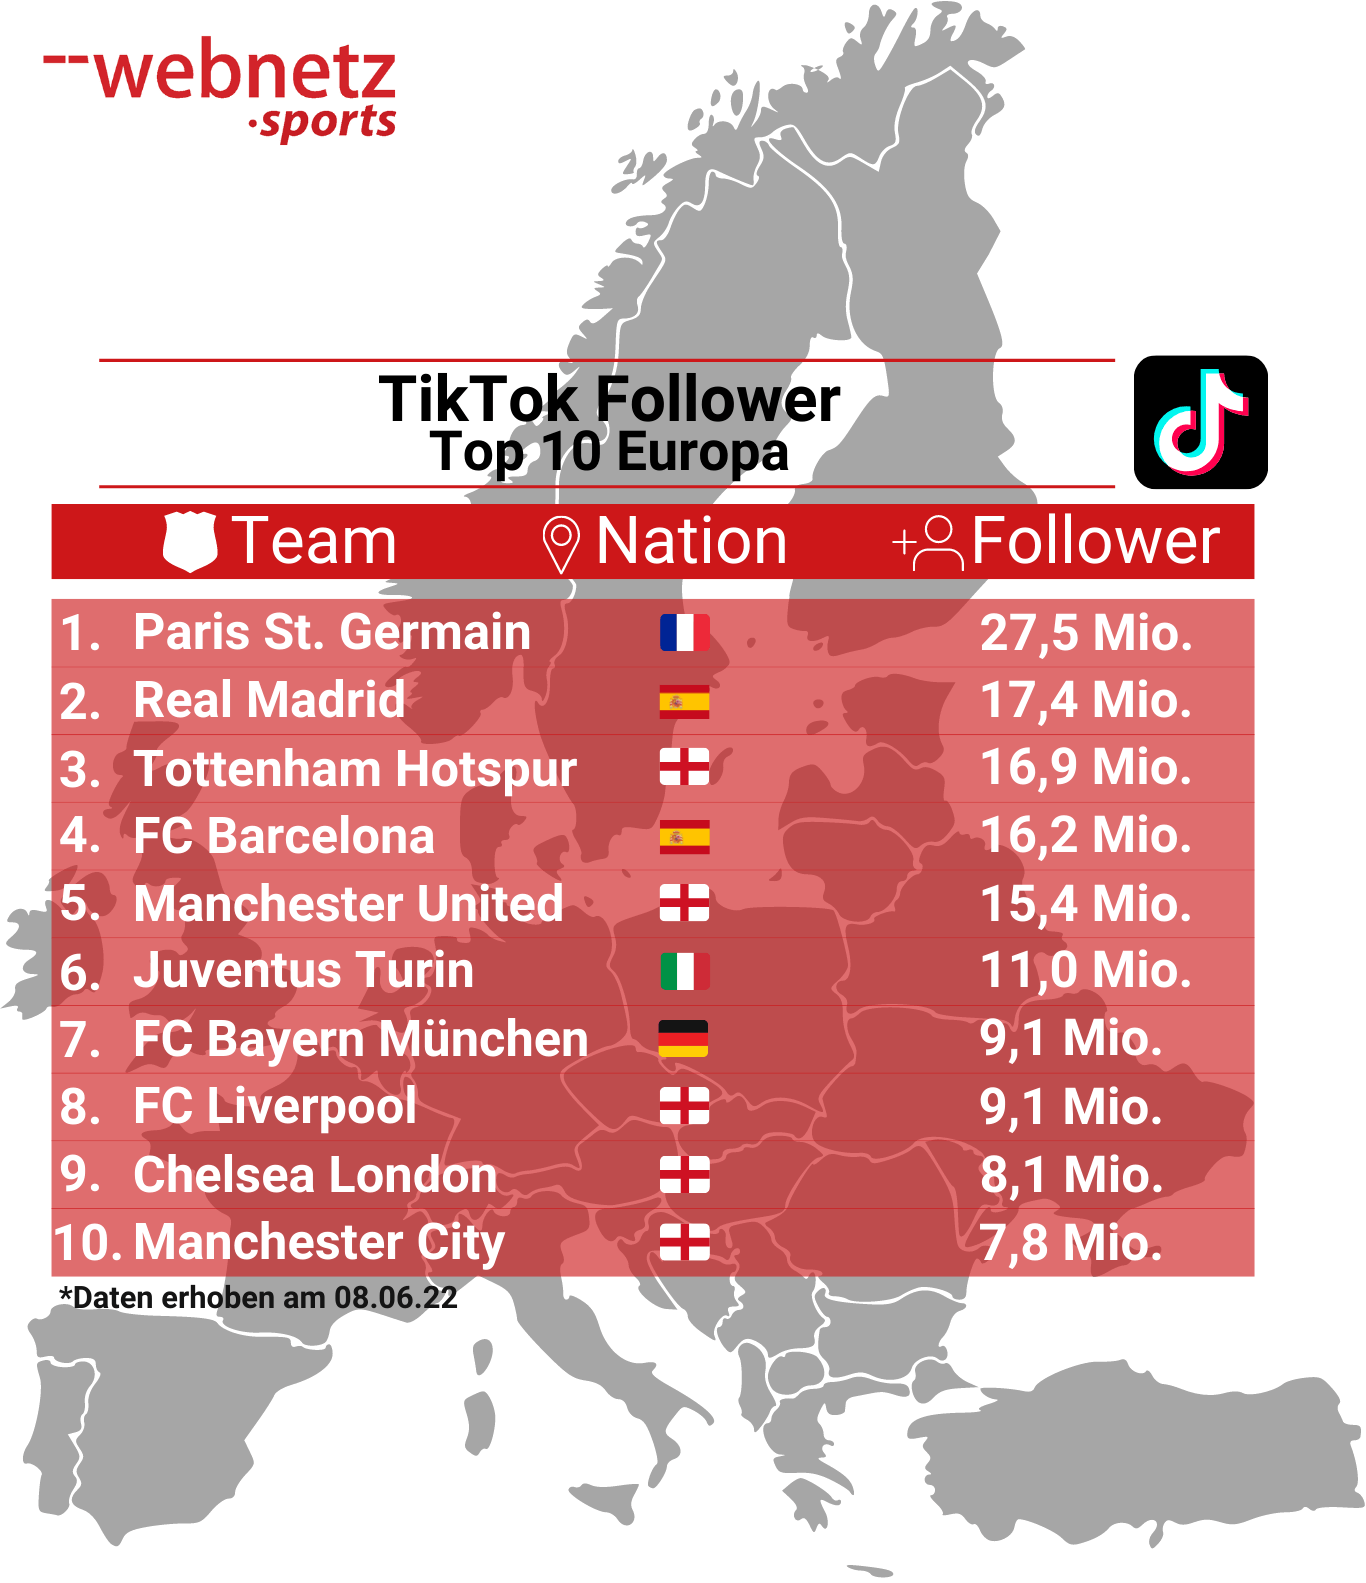 TikTok Top 10 Follower Europa